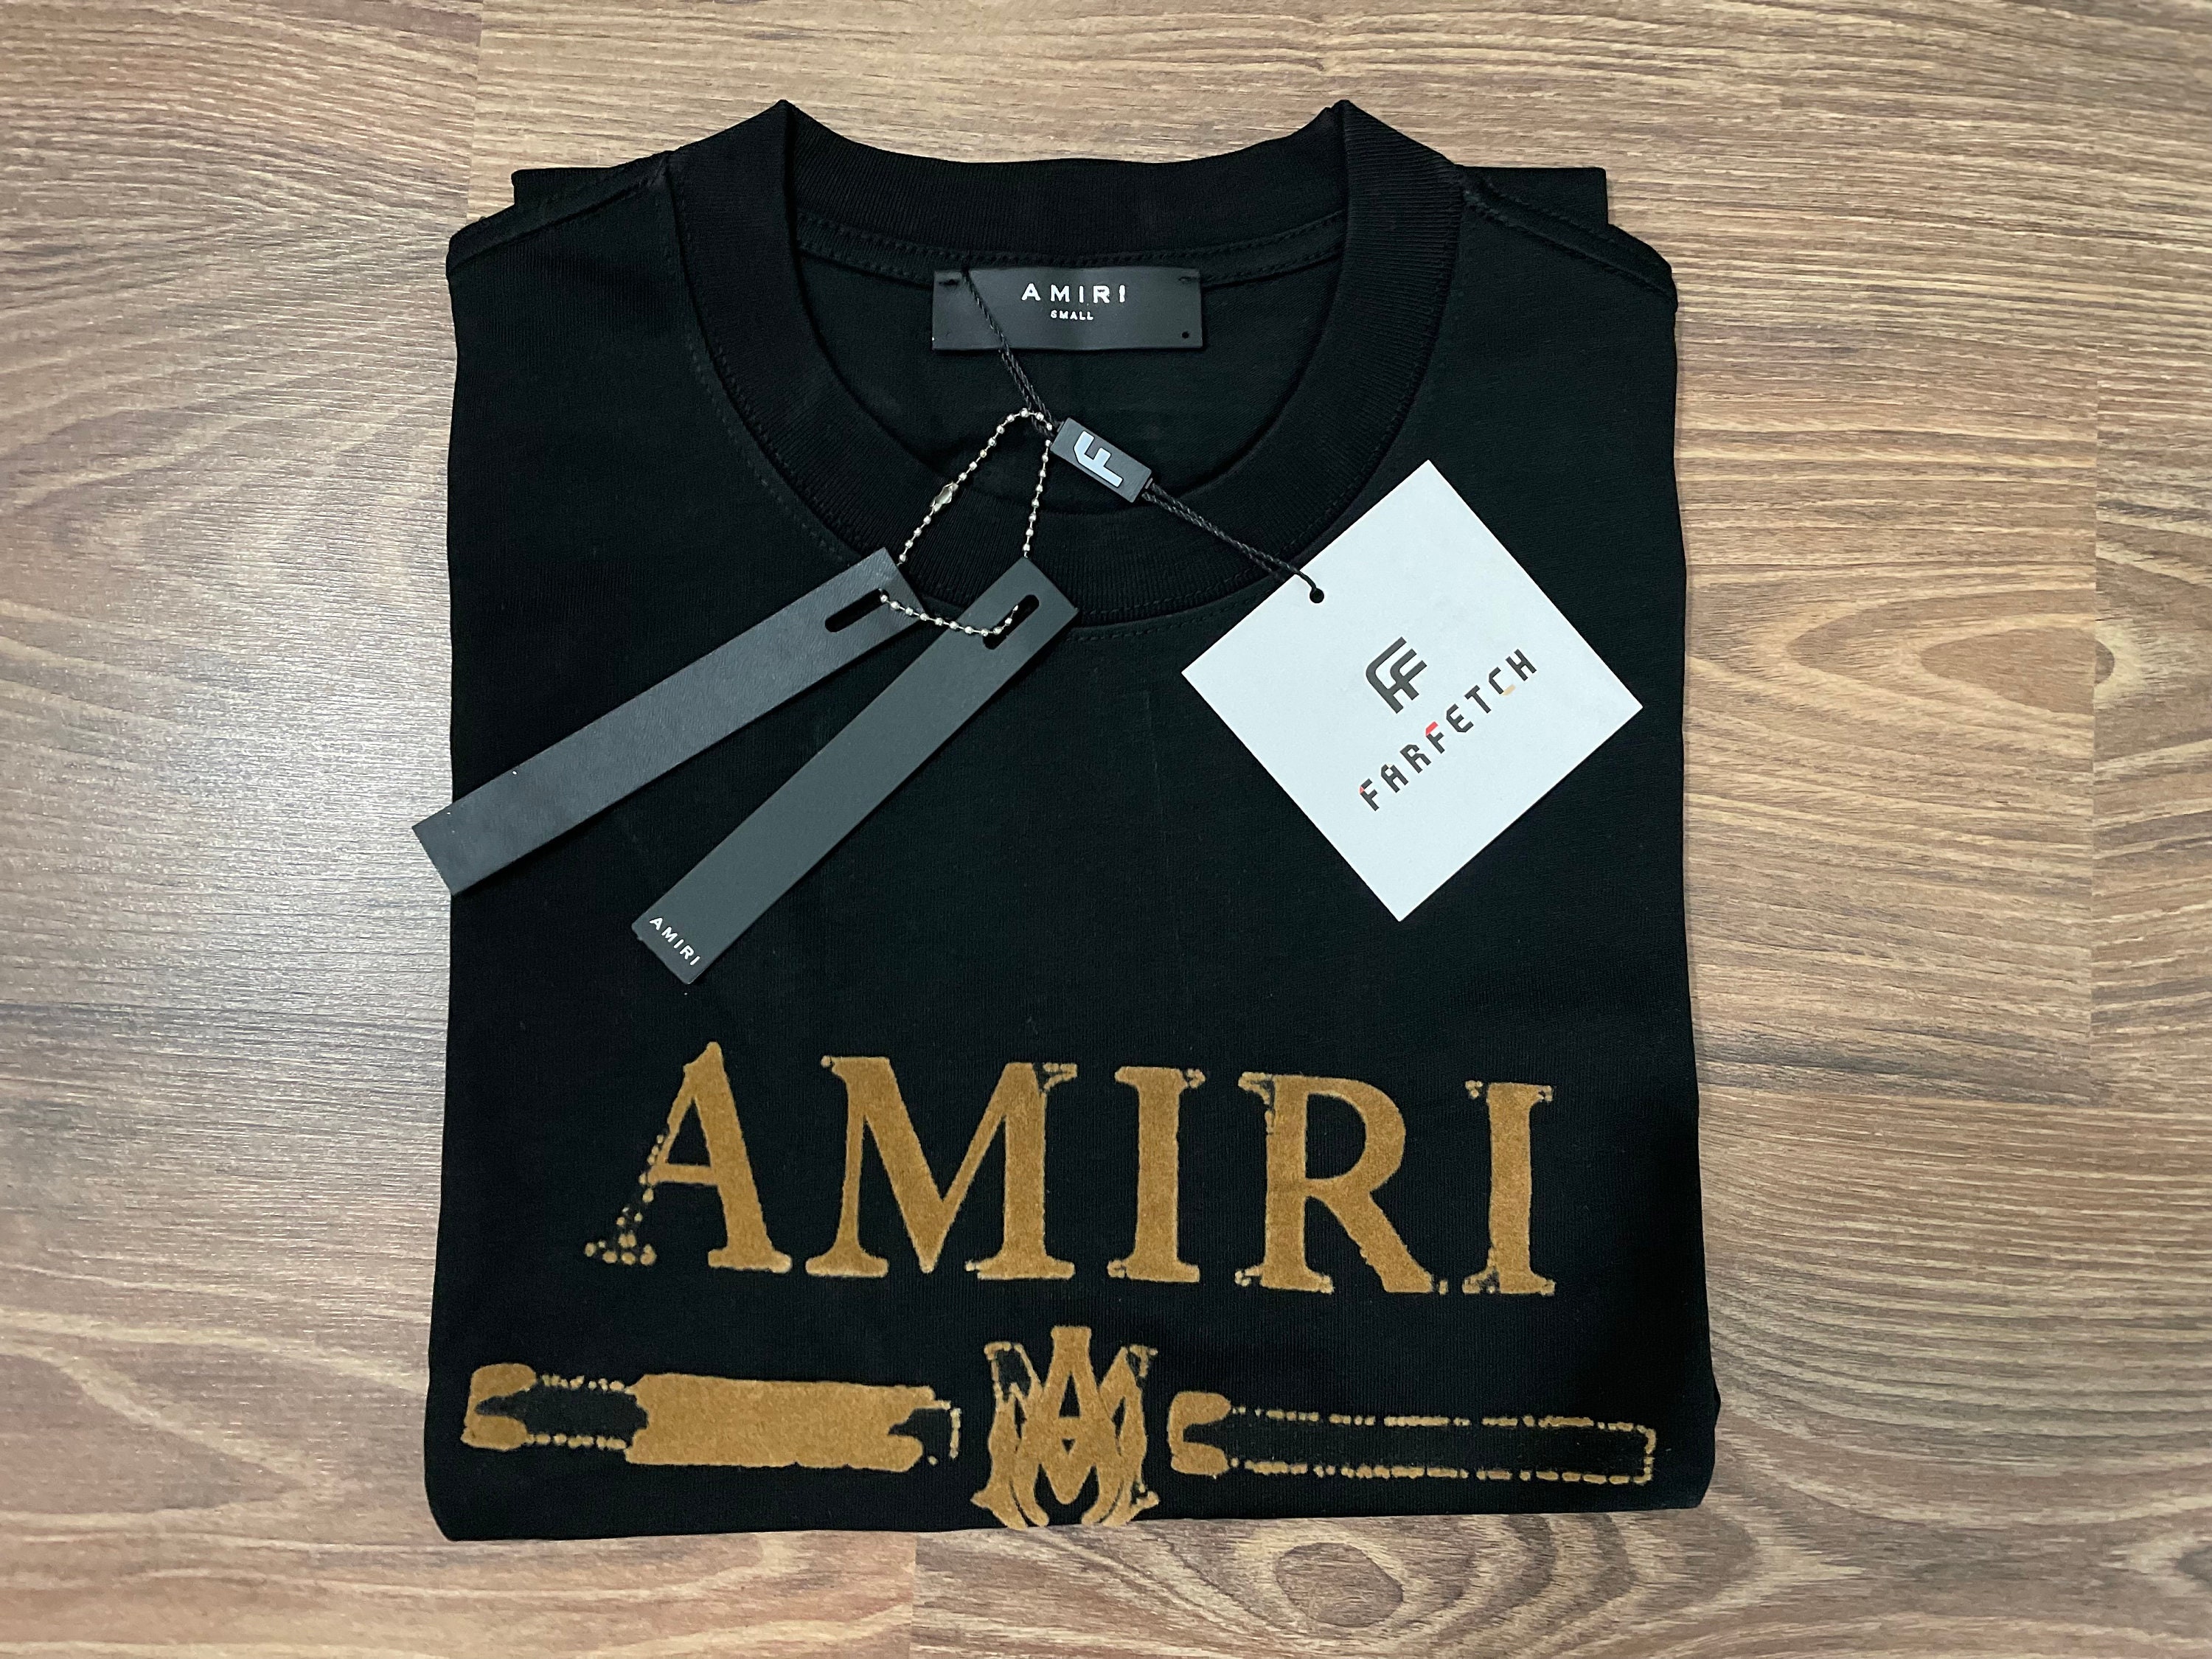 Amiri Men's T-Shirt